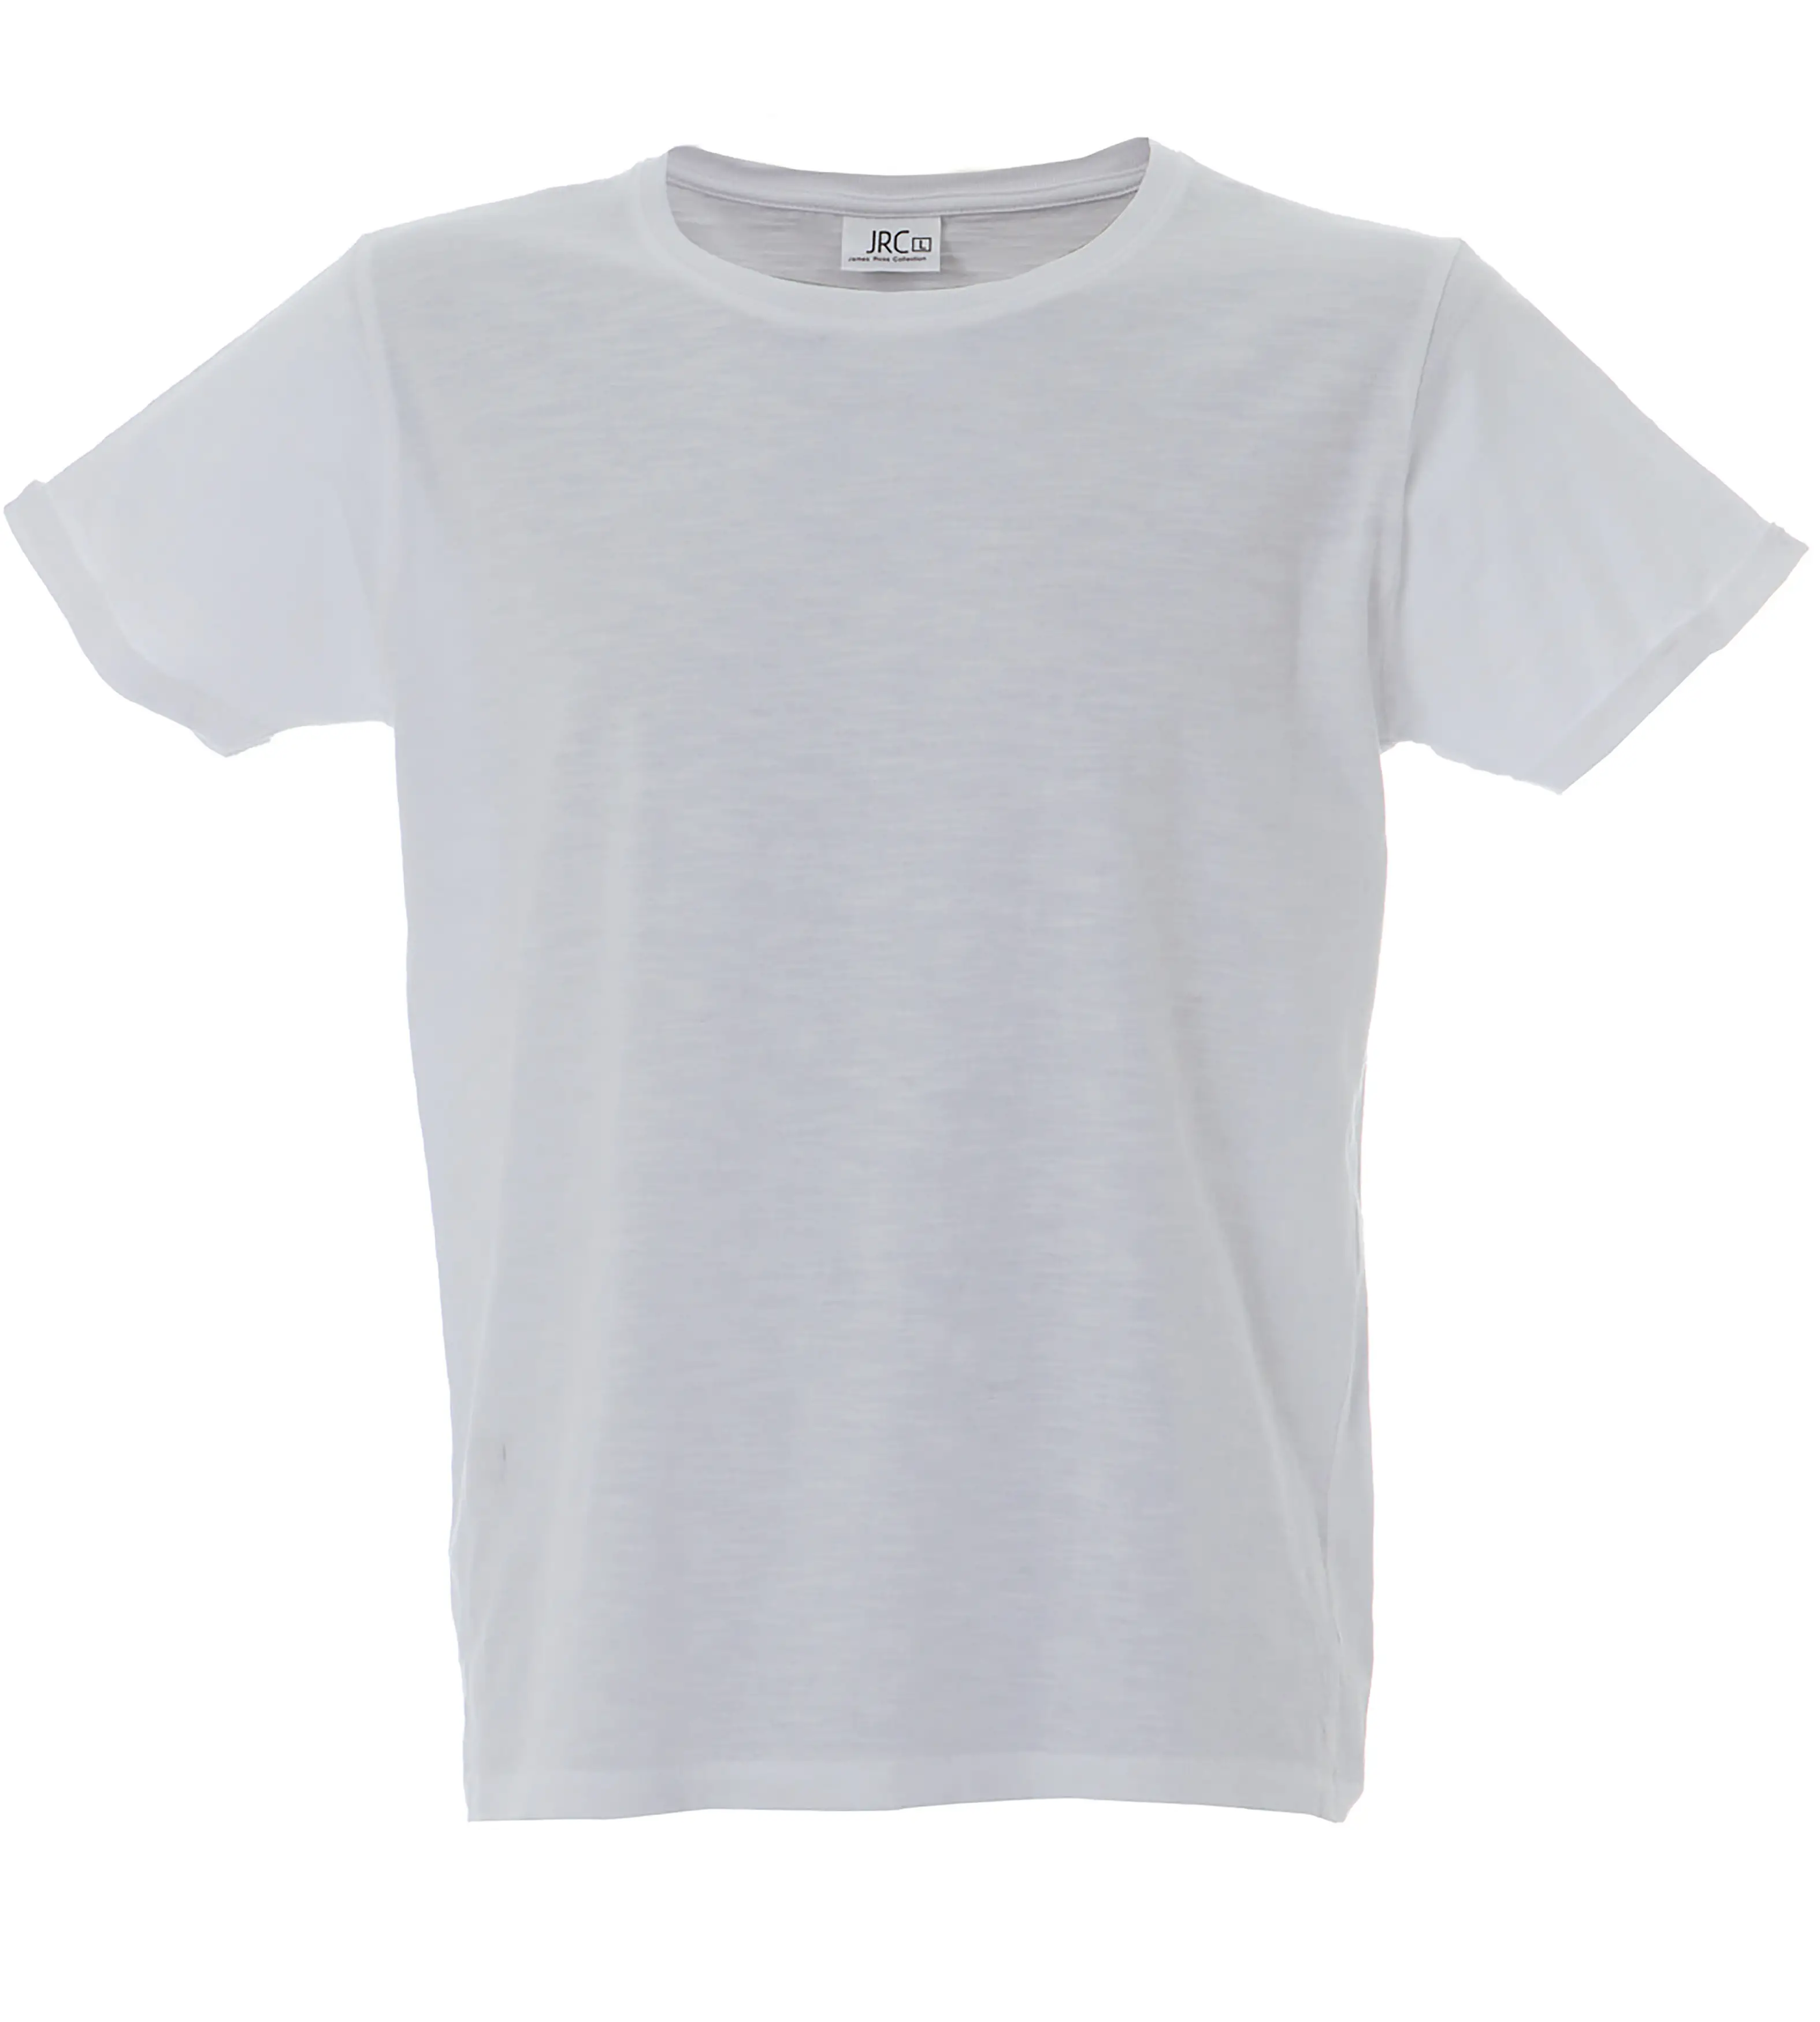 T-shirt perth man - white - s